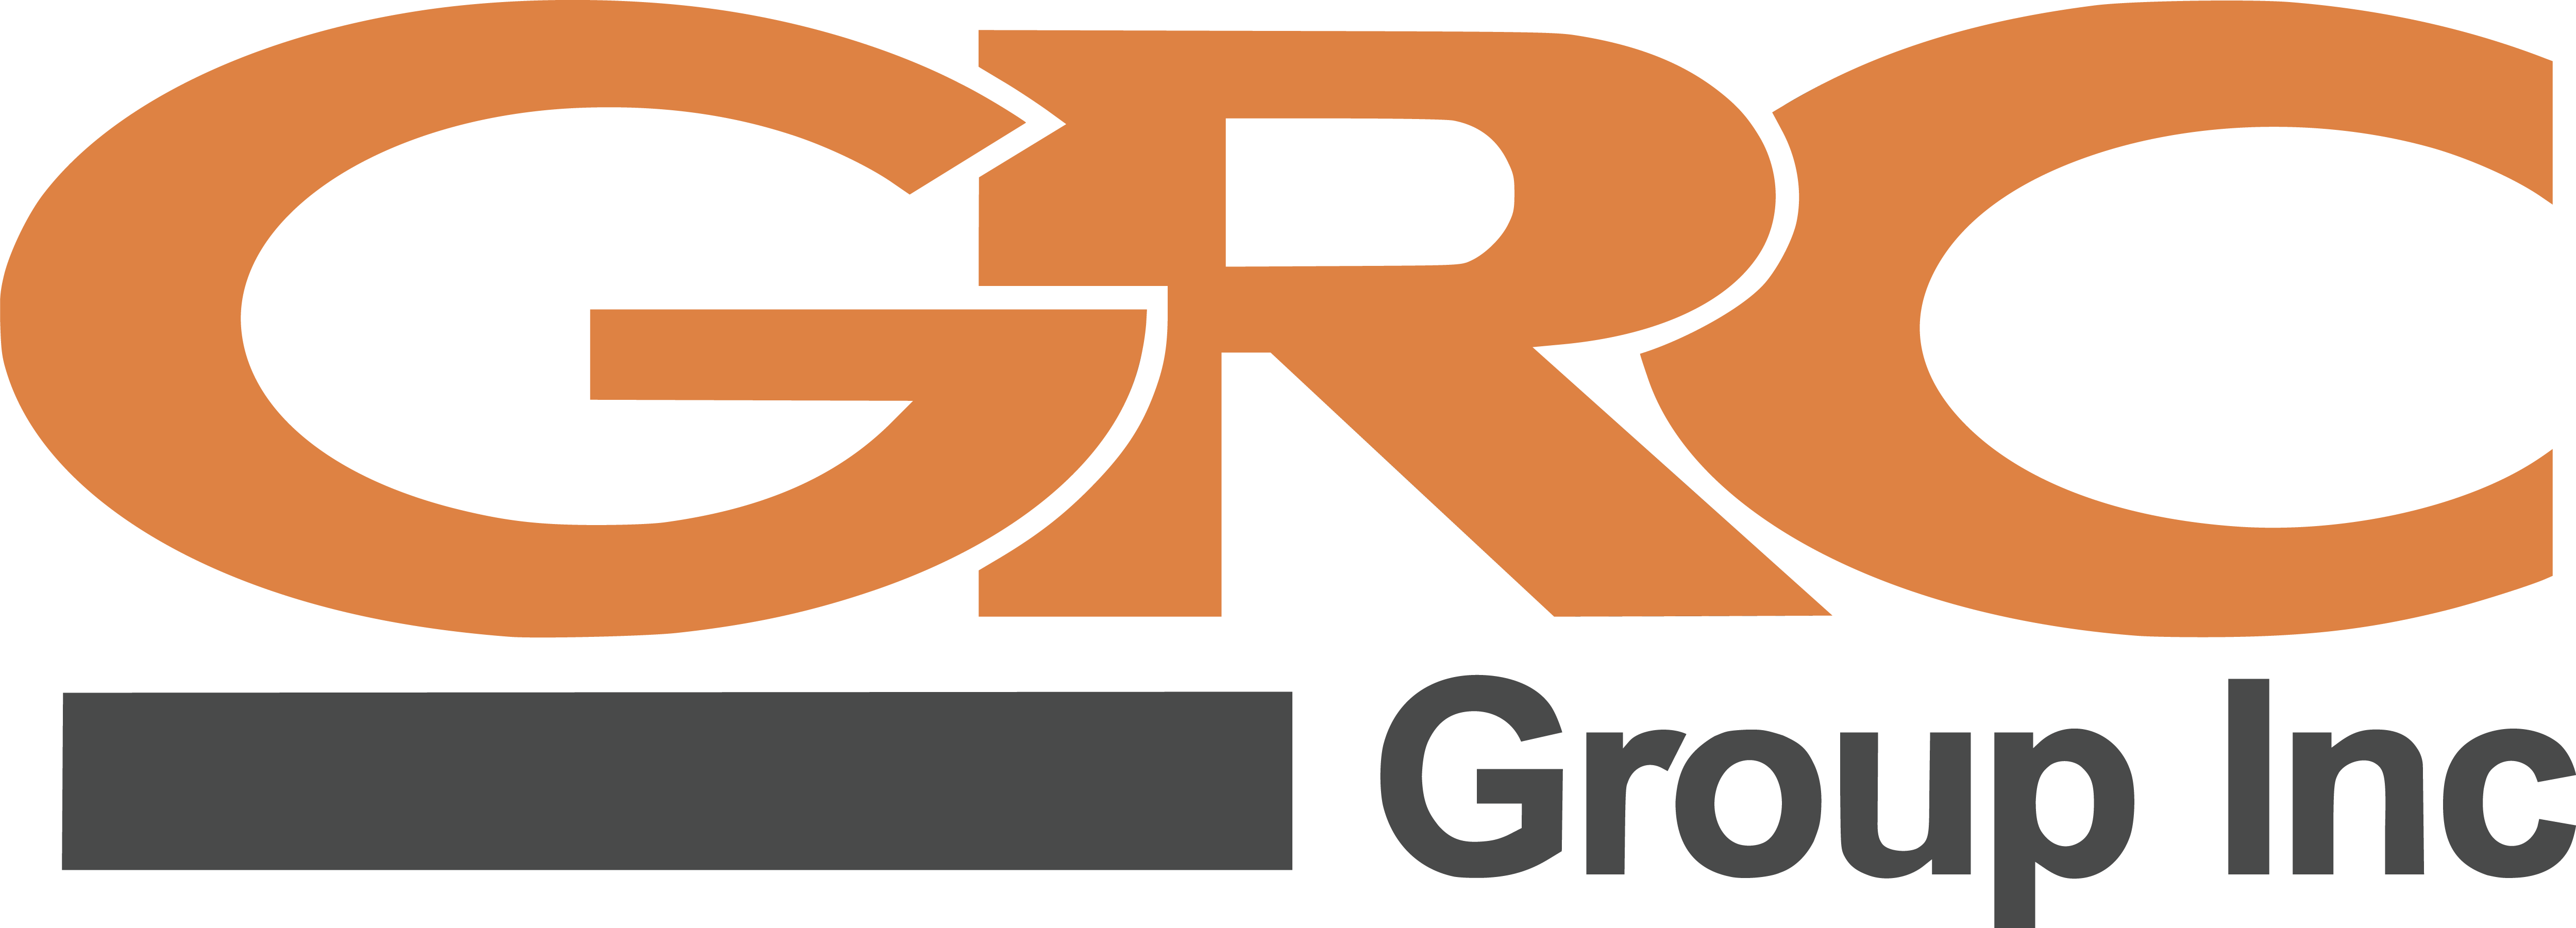 GRC_Group_Inc